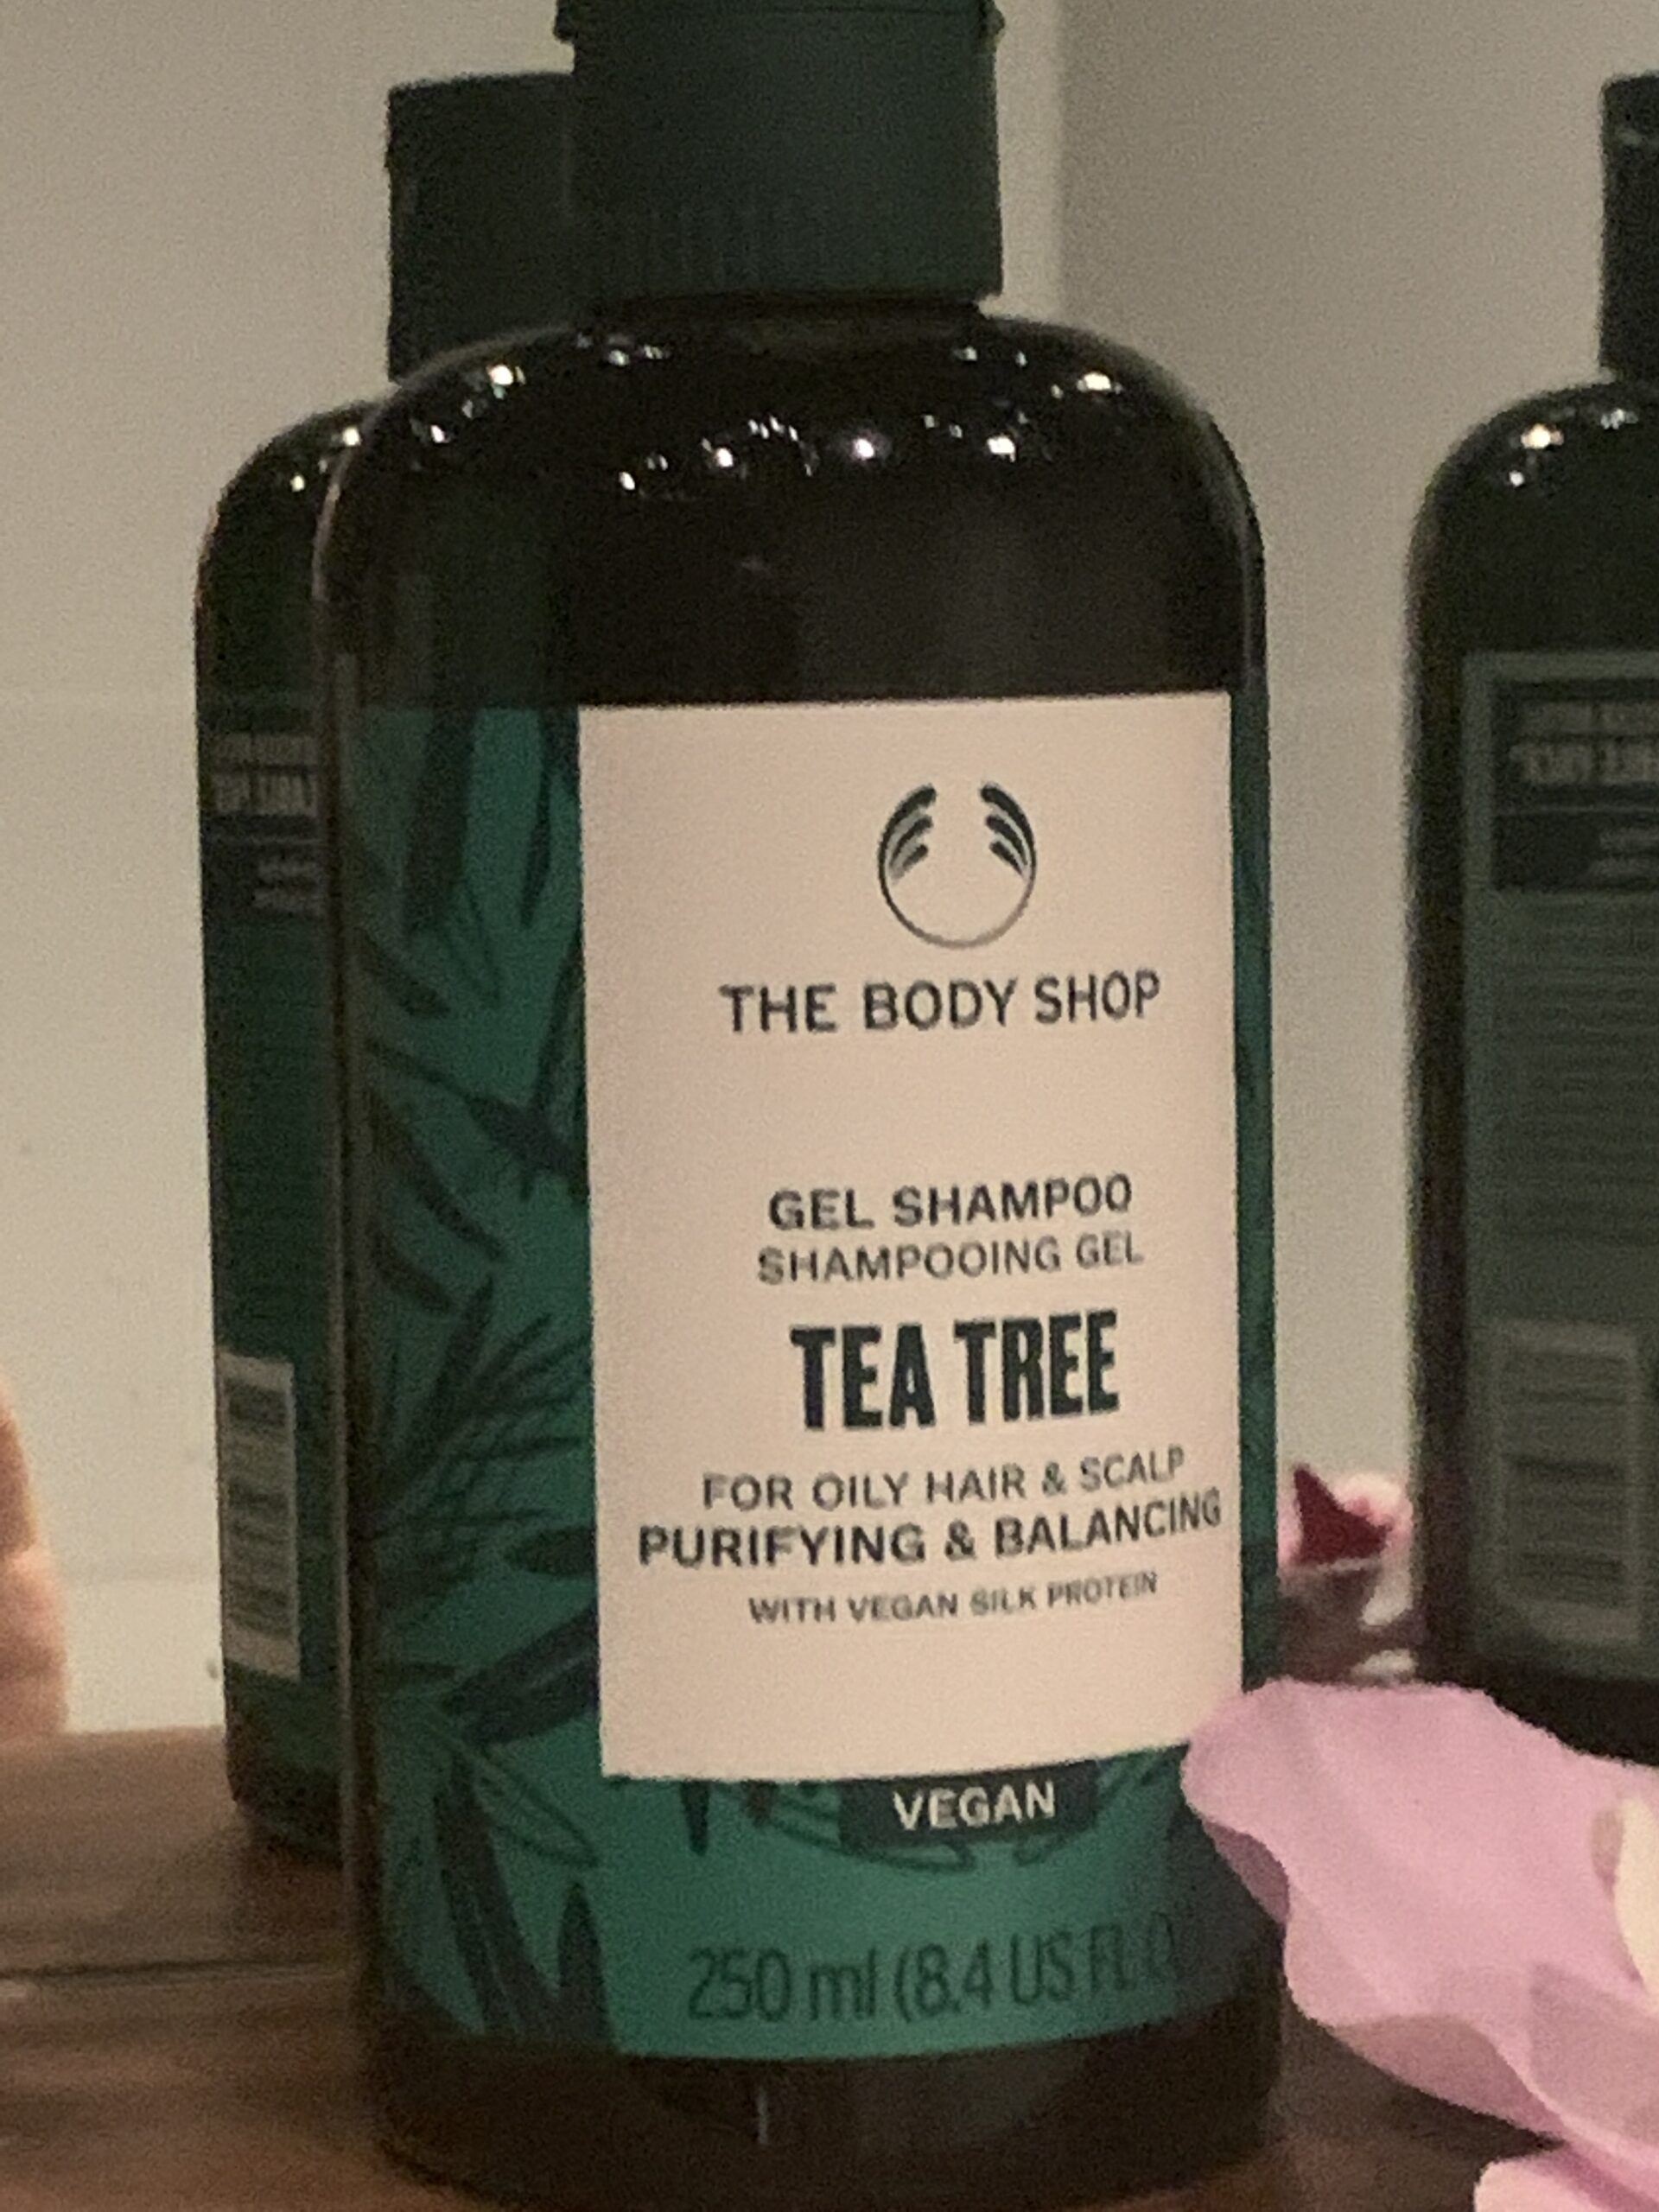 The Body Shop Gel Shampoo tea tree